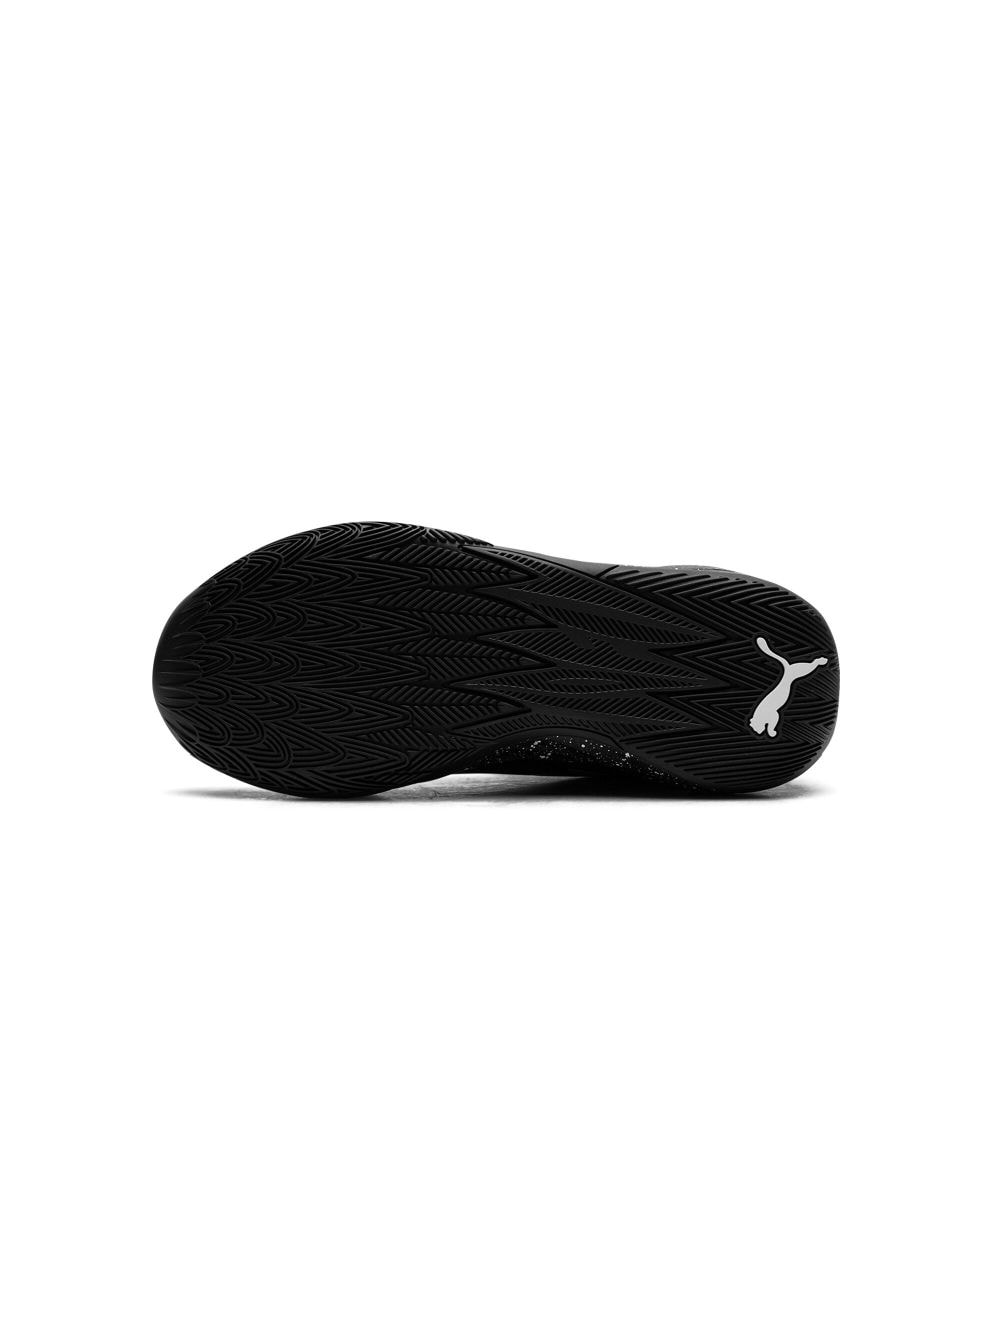 Shop Puma Mb.02 "black/white/oreo" Sneakers